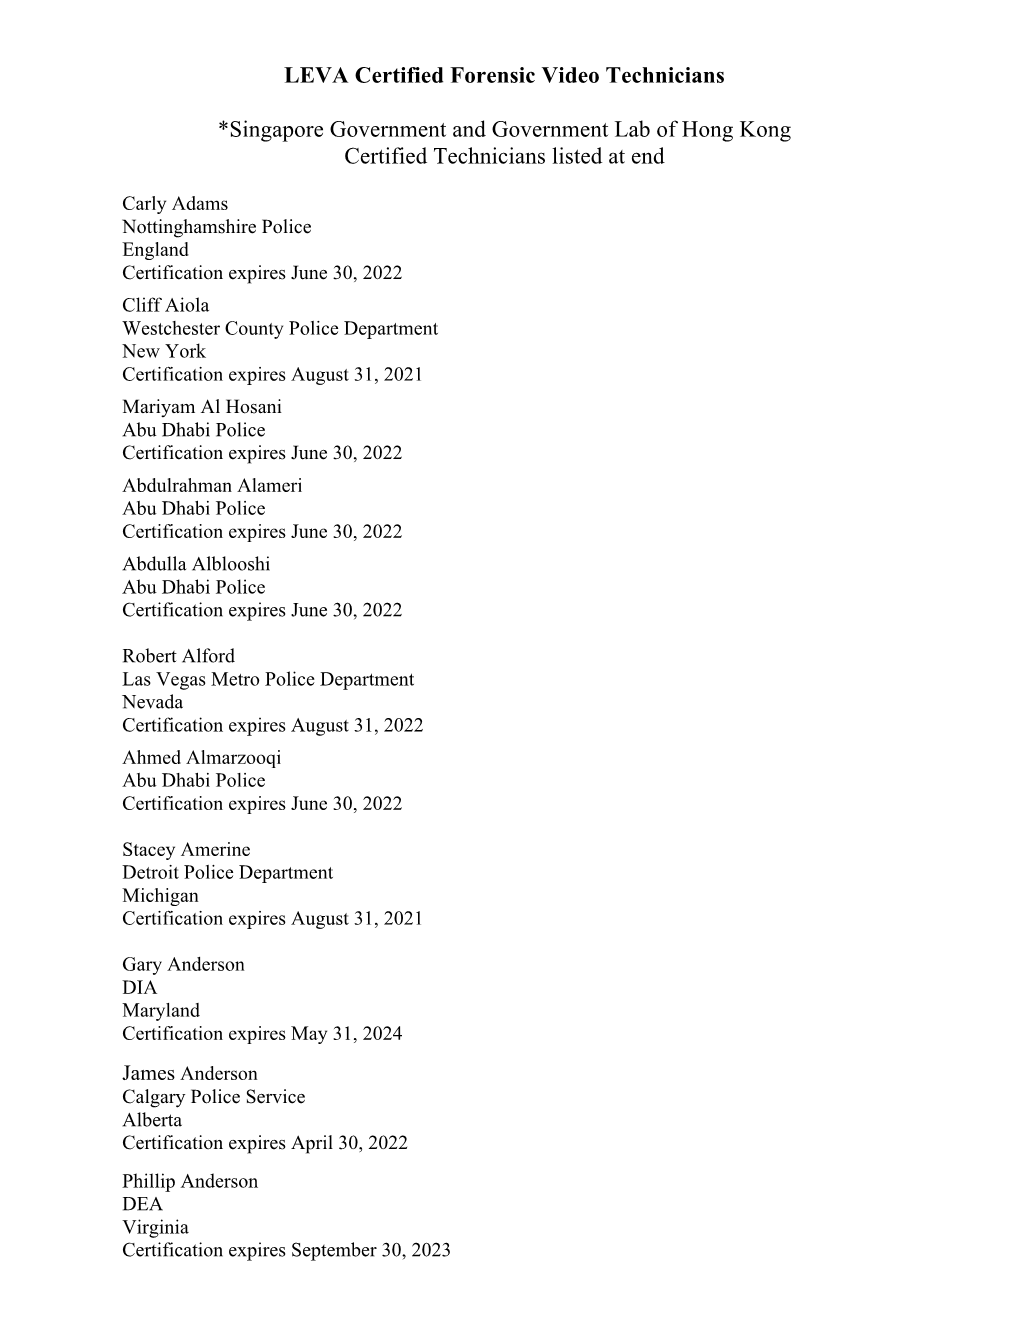 Current CFVT List